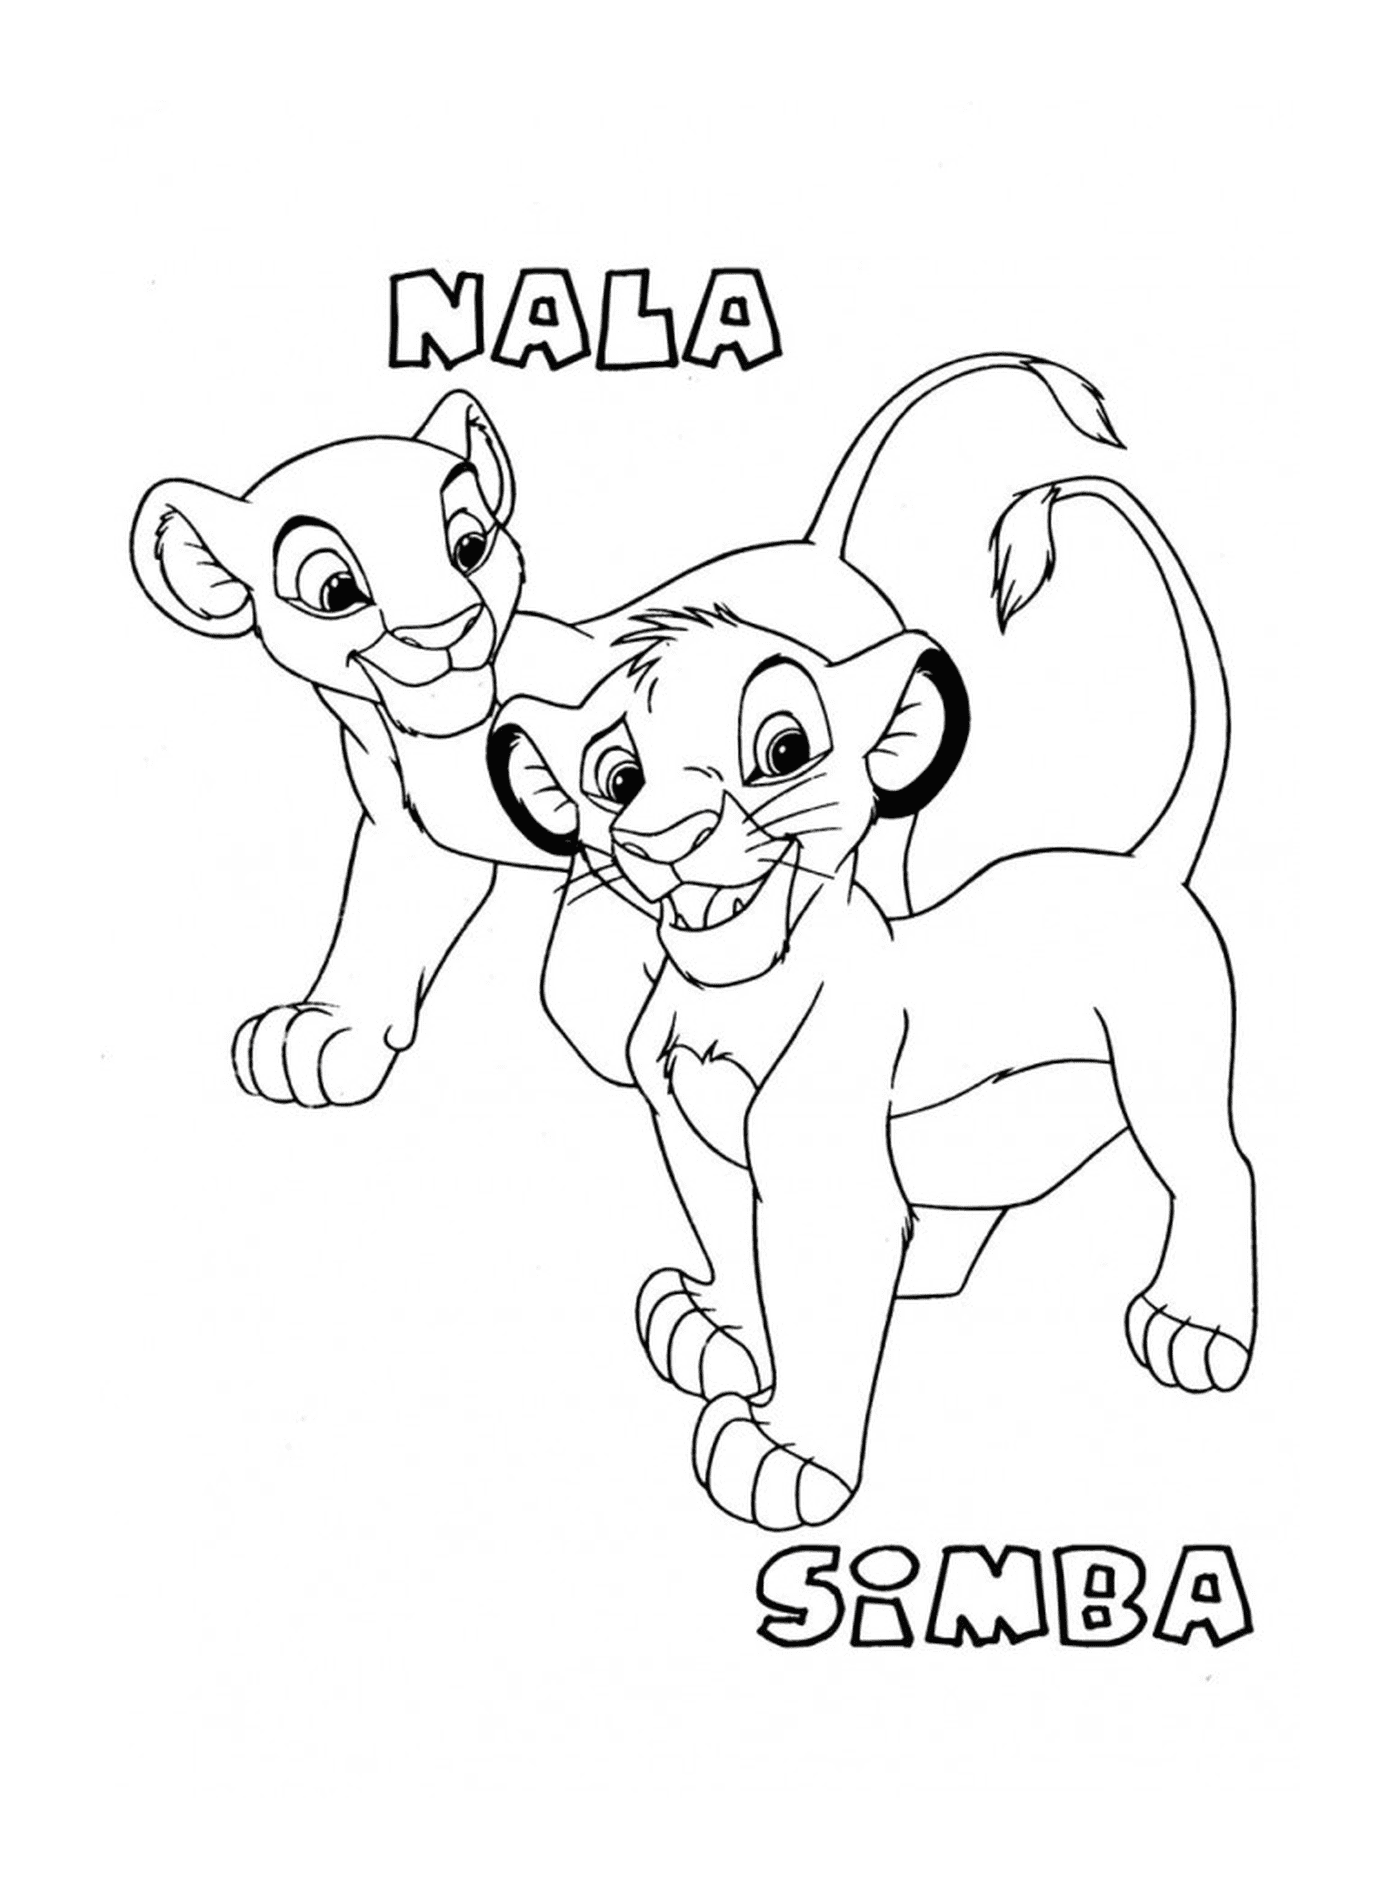  Simba e Nala bambini nel Re Leone 